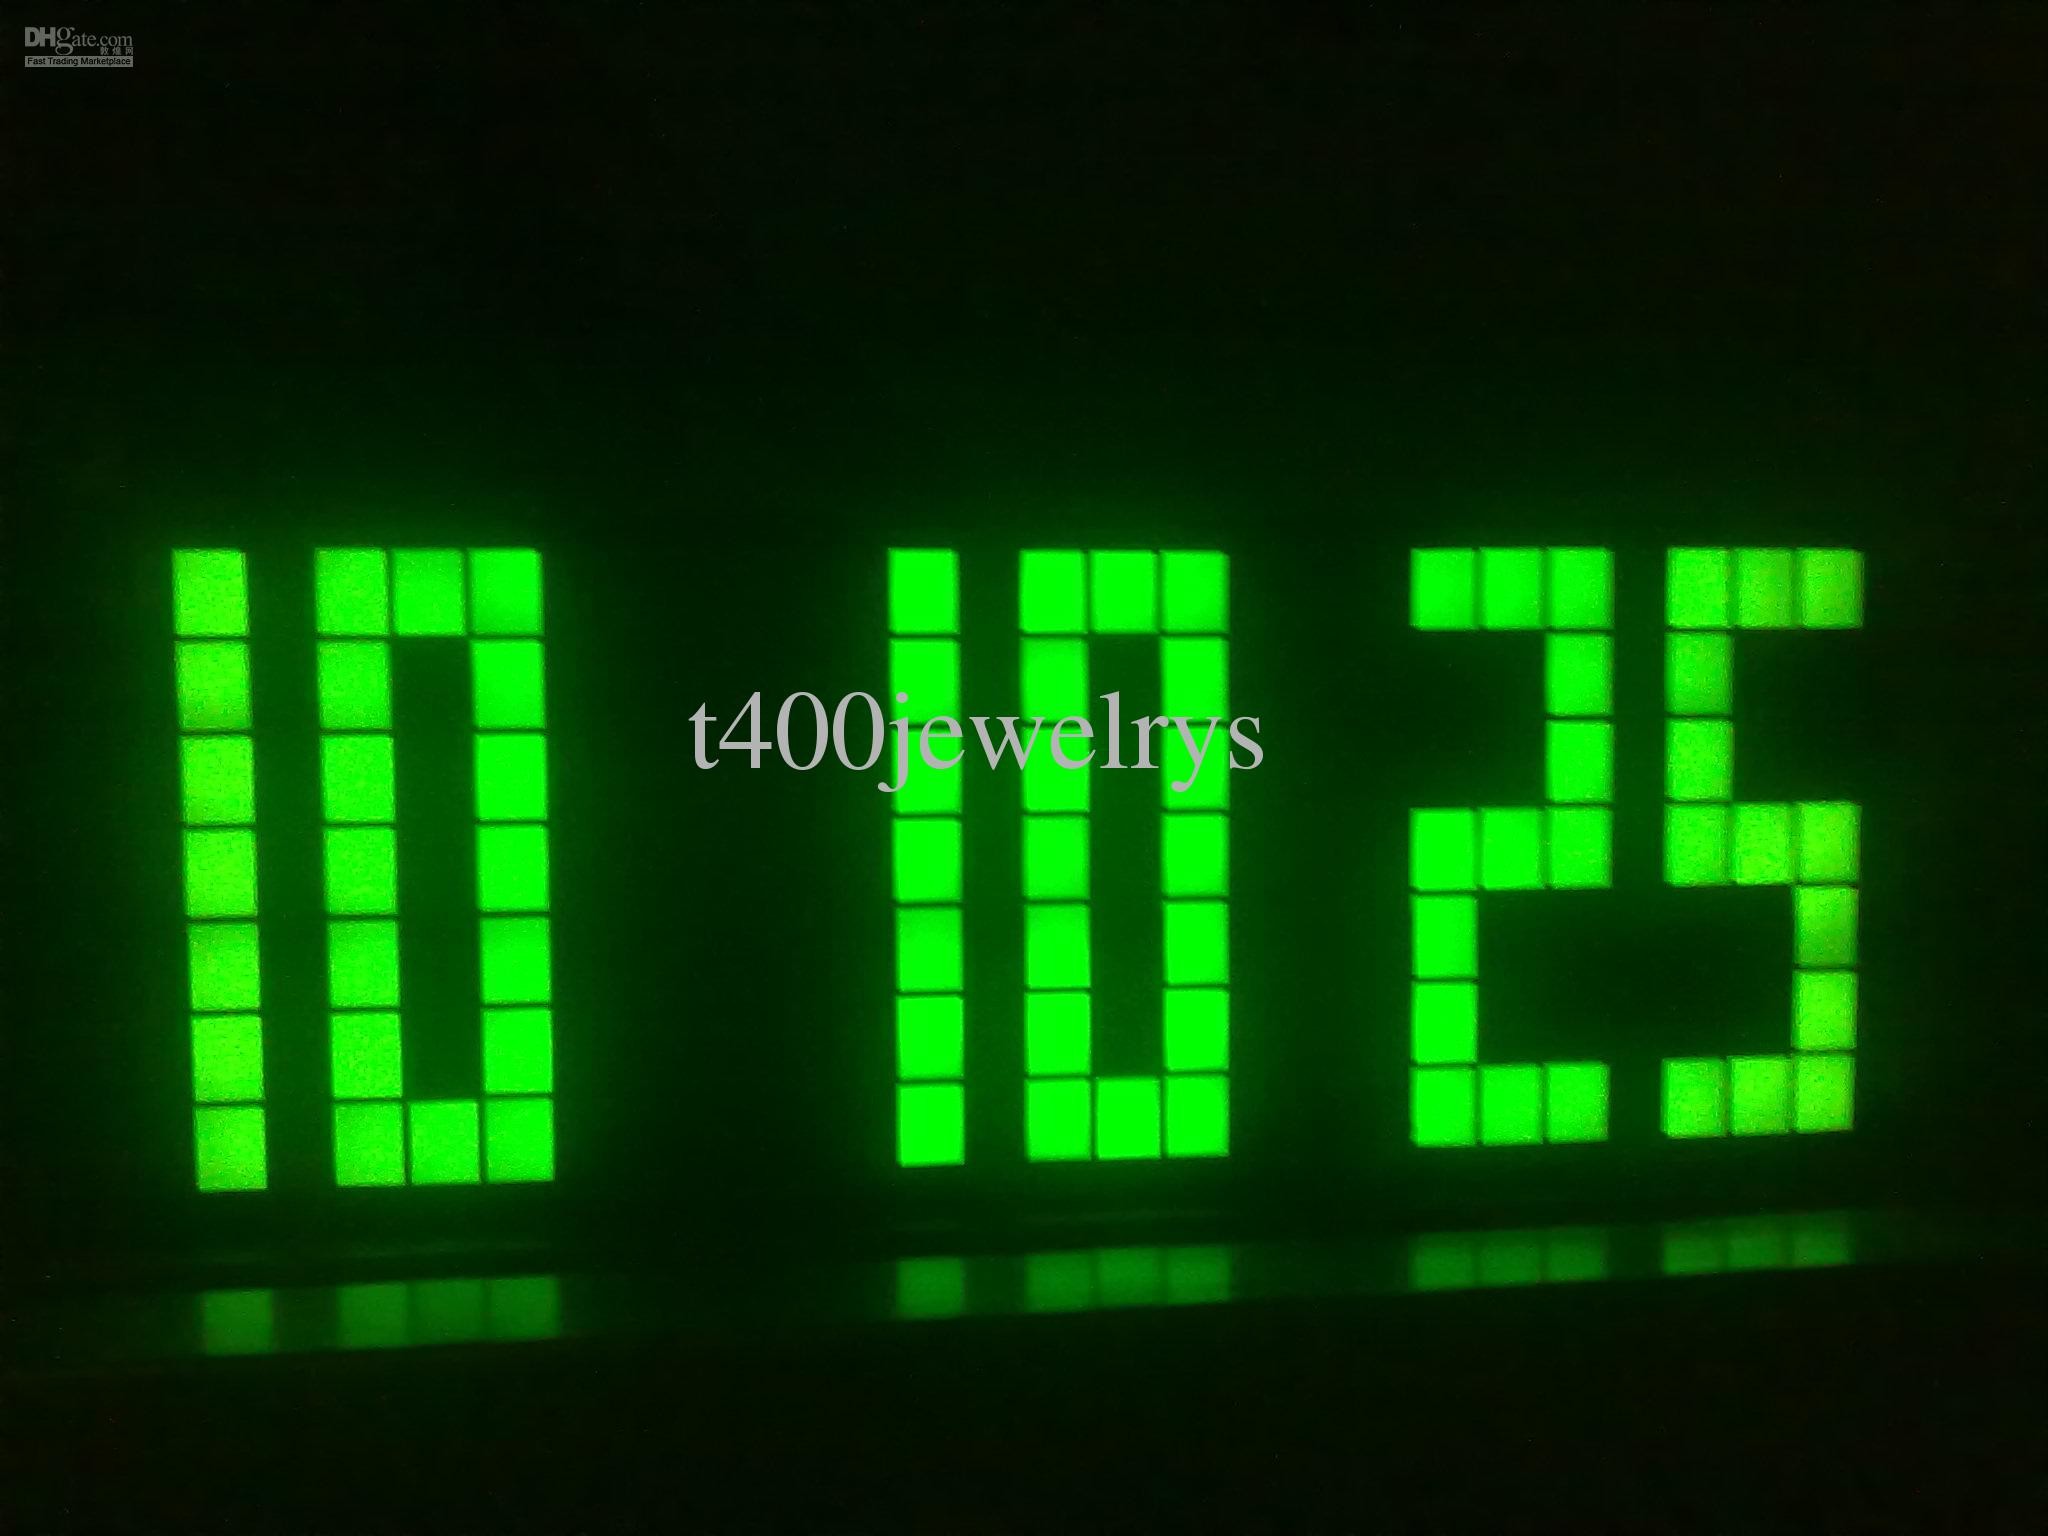 2048x1536 digital clock desktop wallpaper - www.high-definition-wallpaper.com